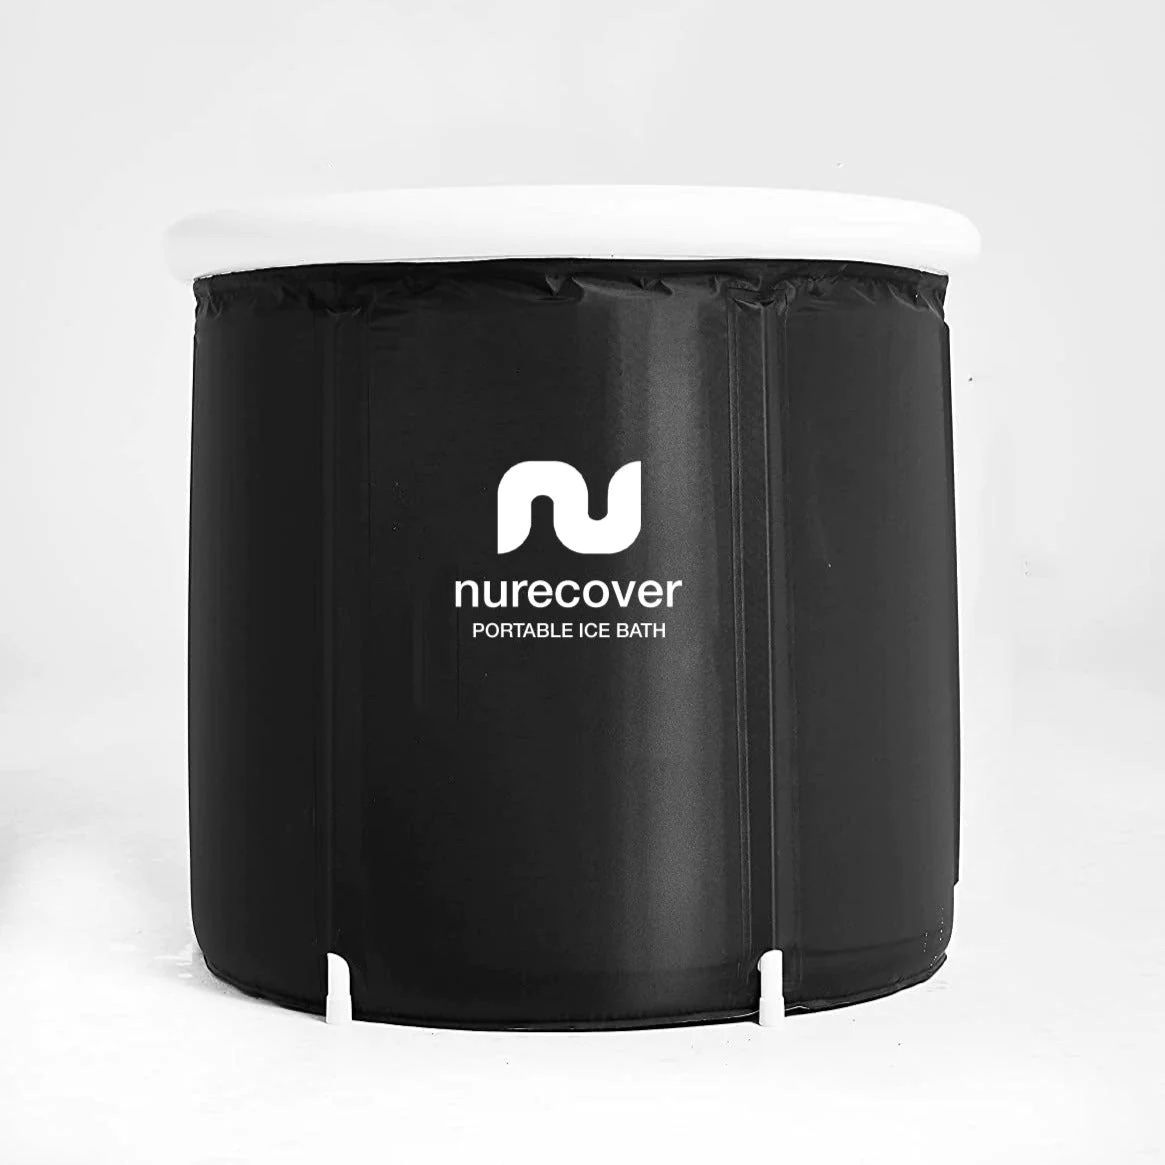 nurecover - discount code LISA41414 - rohtopia